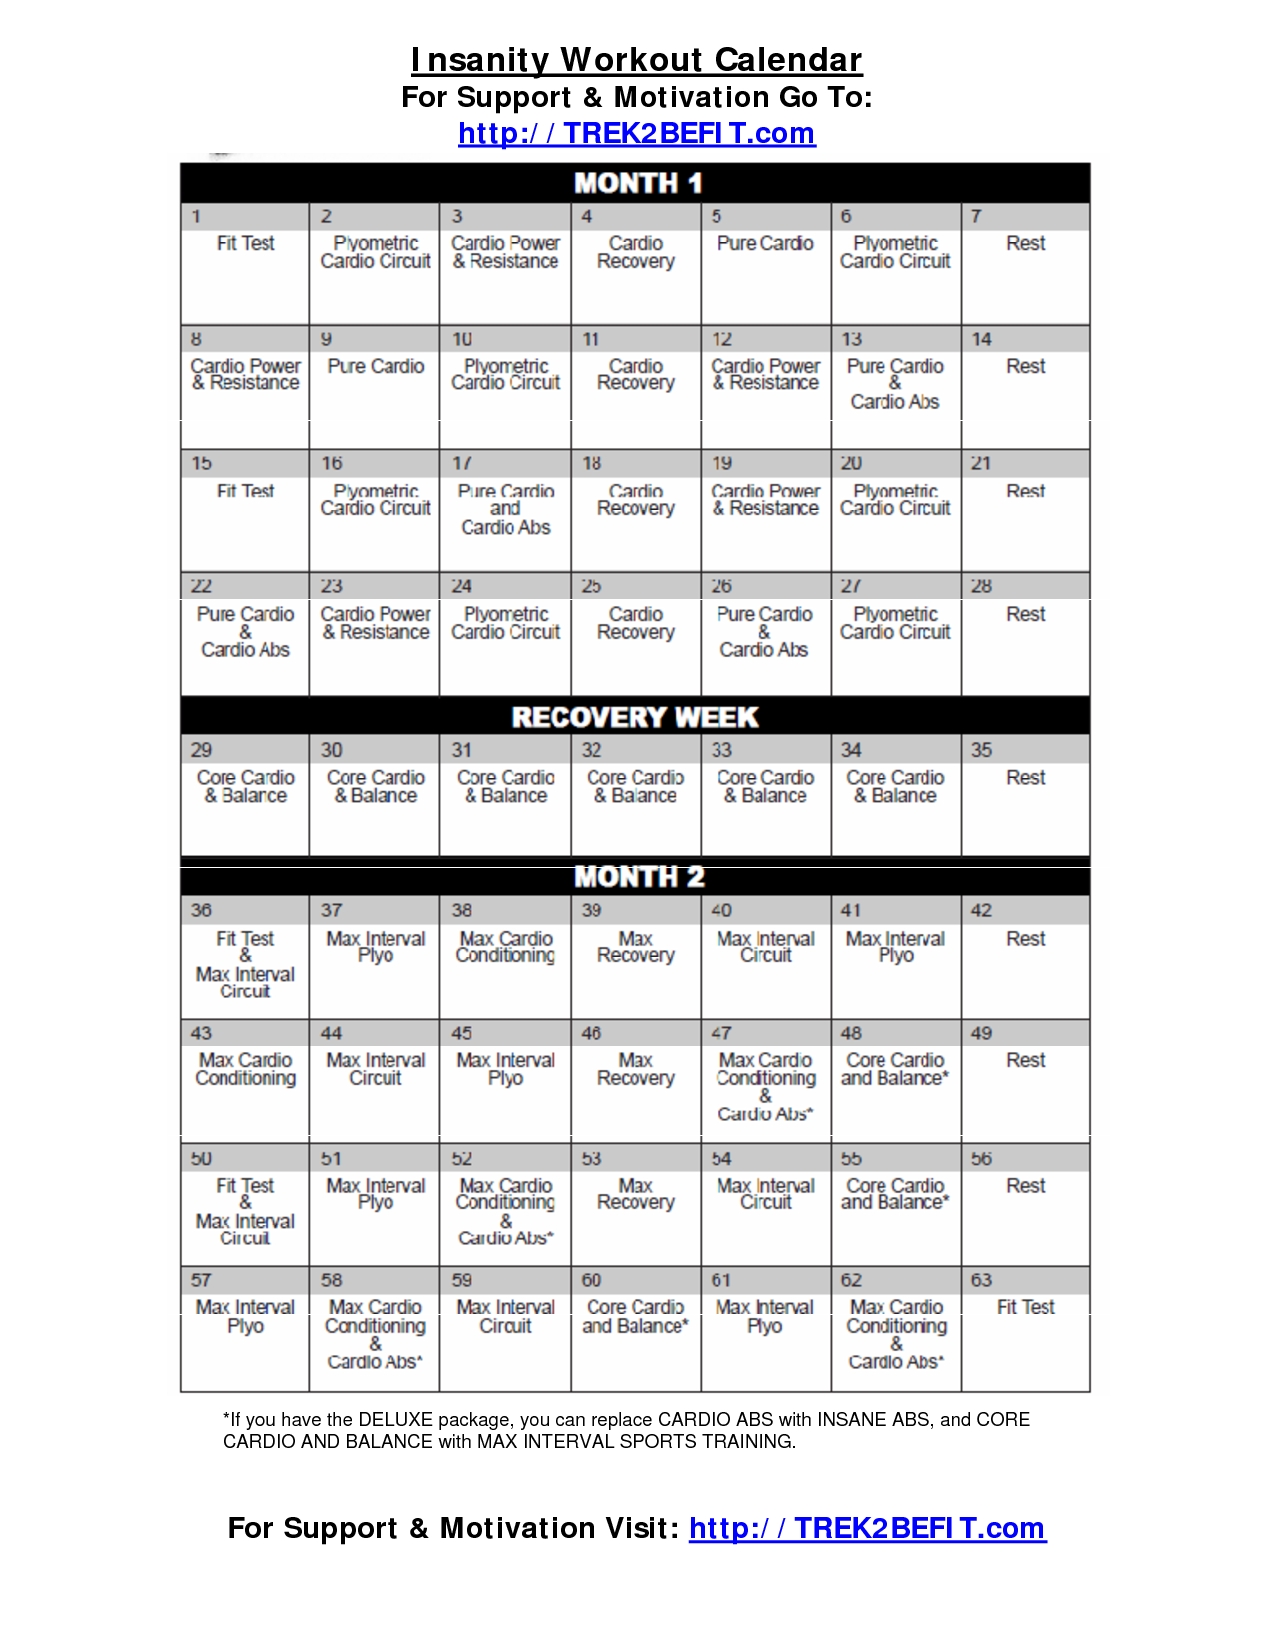 Insanity Workout Calendar | Workout Calendar, Insanity